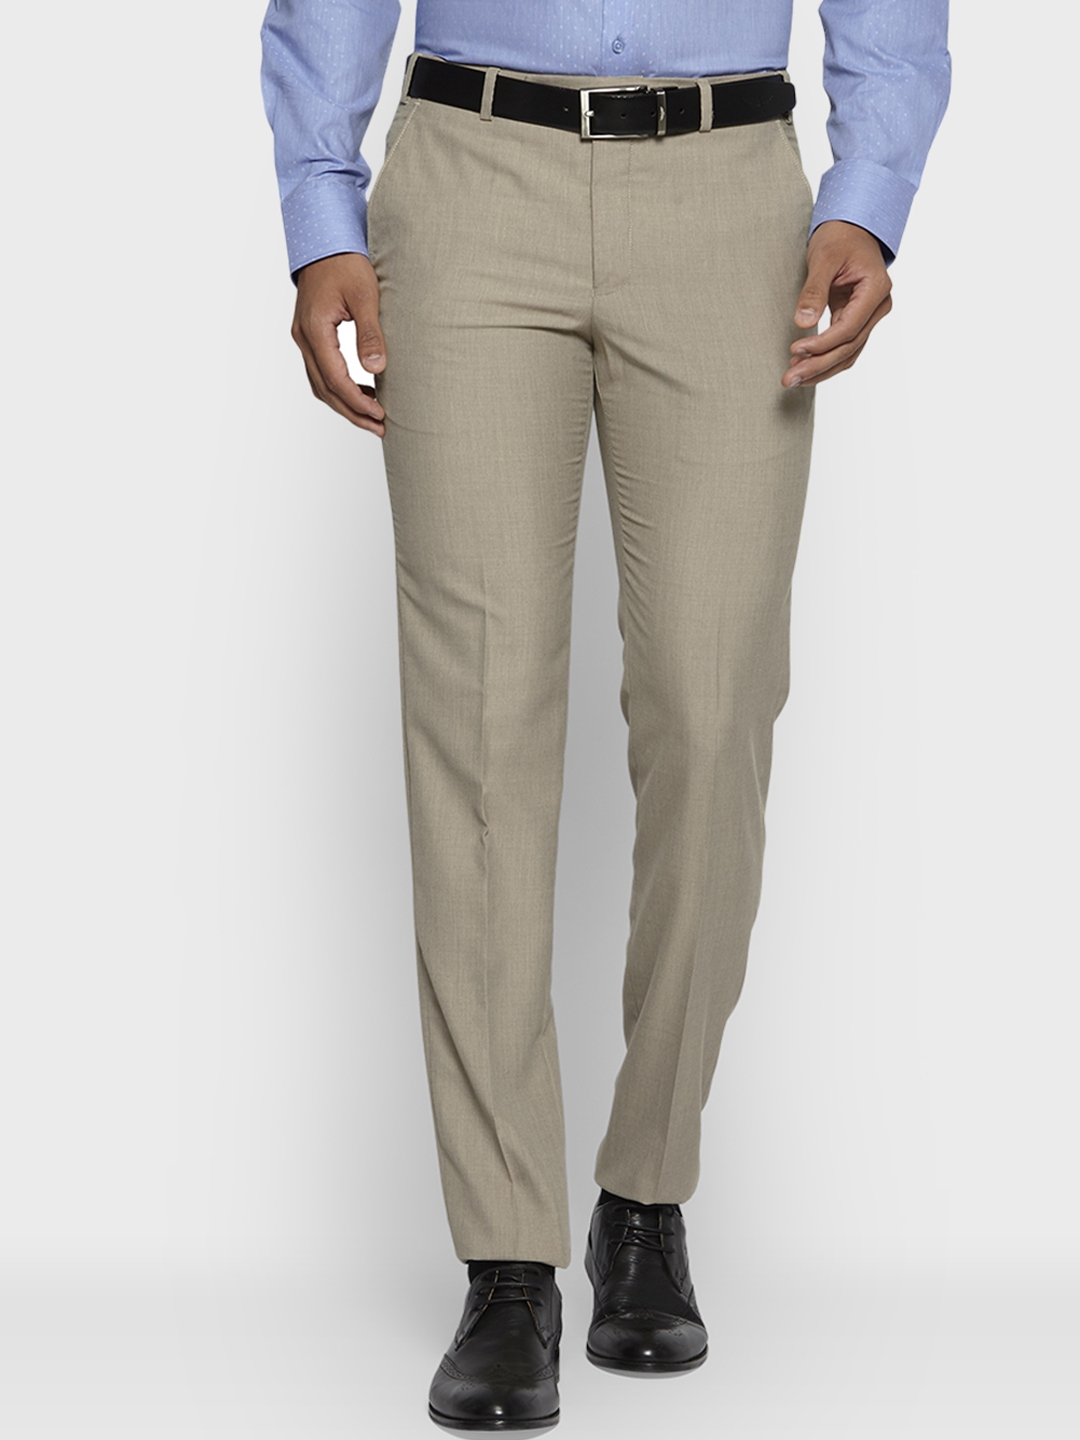 Buy Black Trousers  Pants for Men by NEXT LOOK Online  Ajiocom